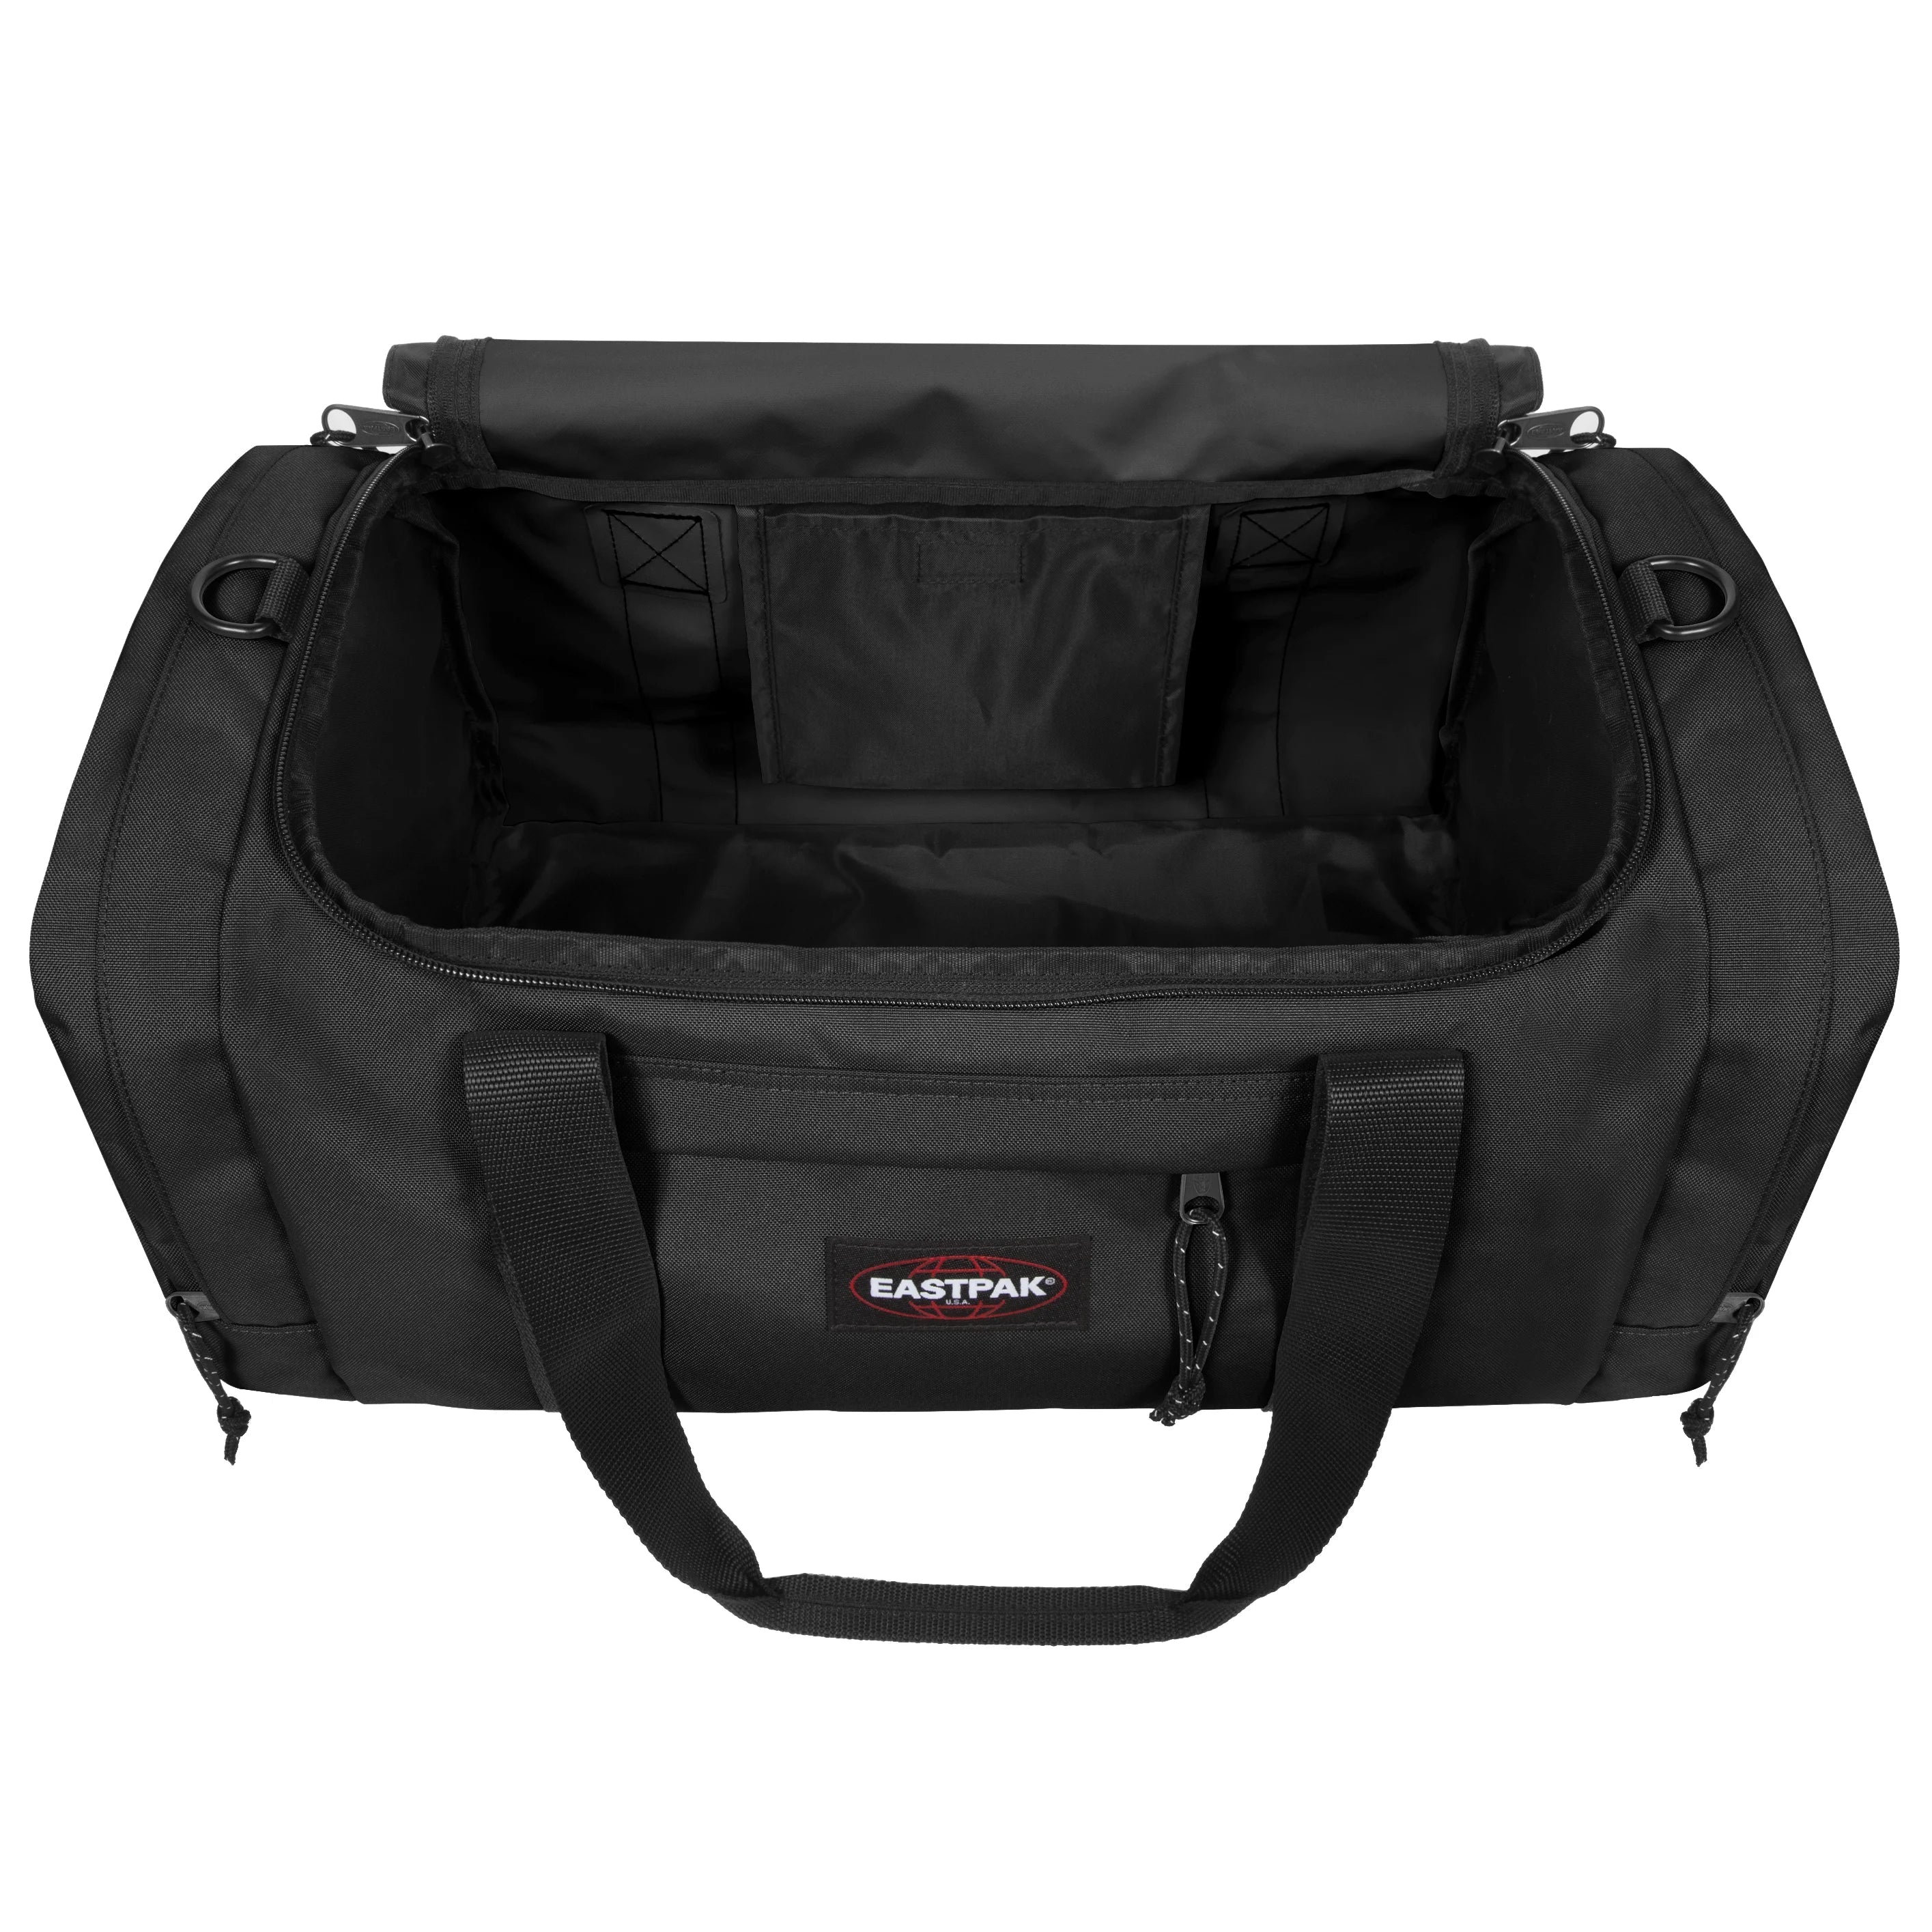 Eastpak Authentic Travel Reader S Plus travel bag 53 cm - triple denim